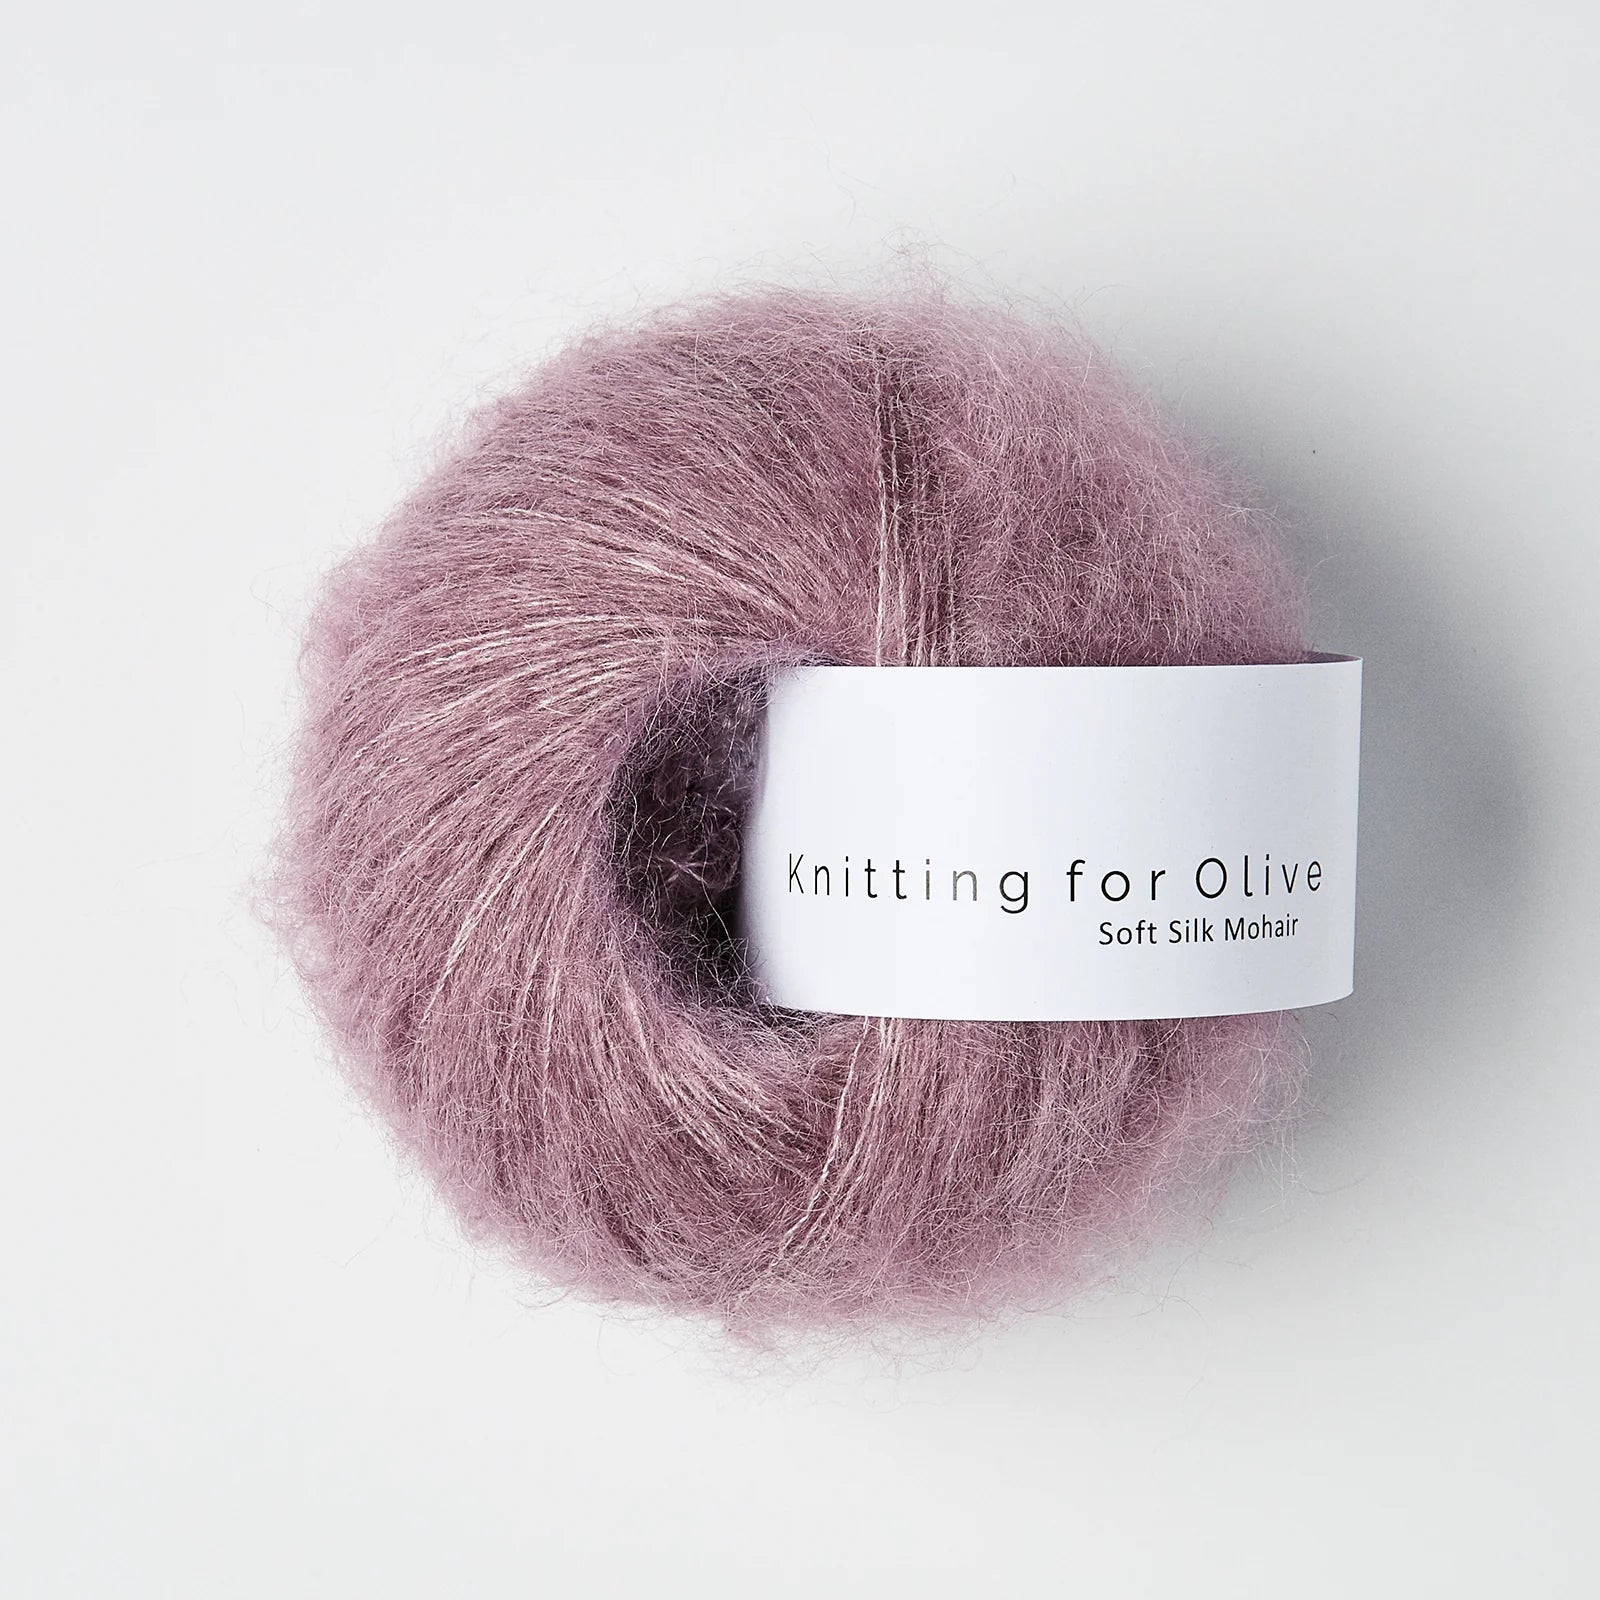 Knitting for Olive Soft Silk Mohair - Knitting for Olive - Artichoke Purple - The Little Yarn Store